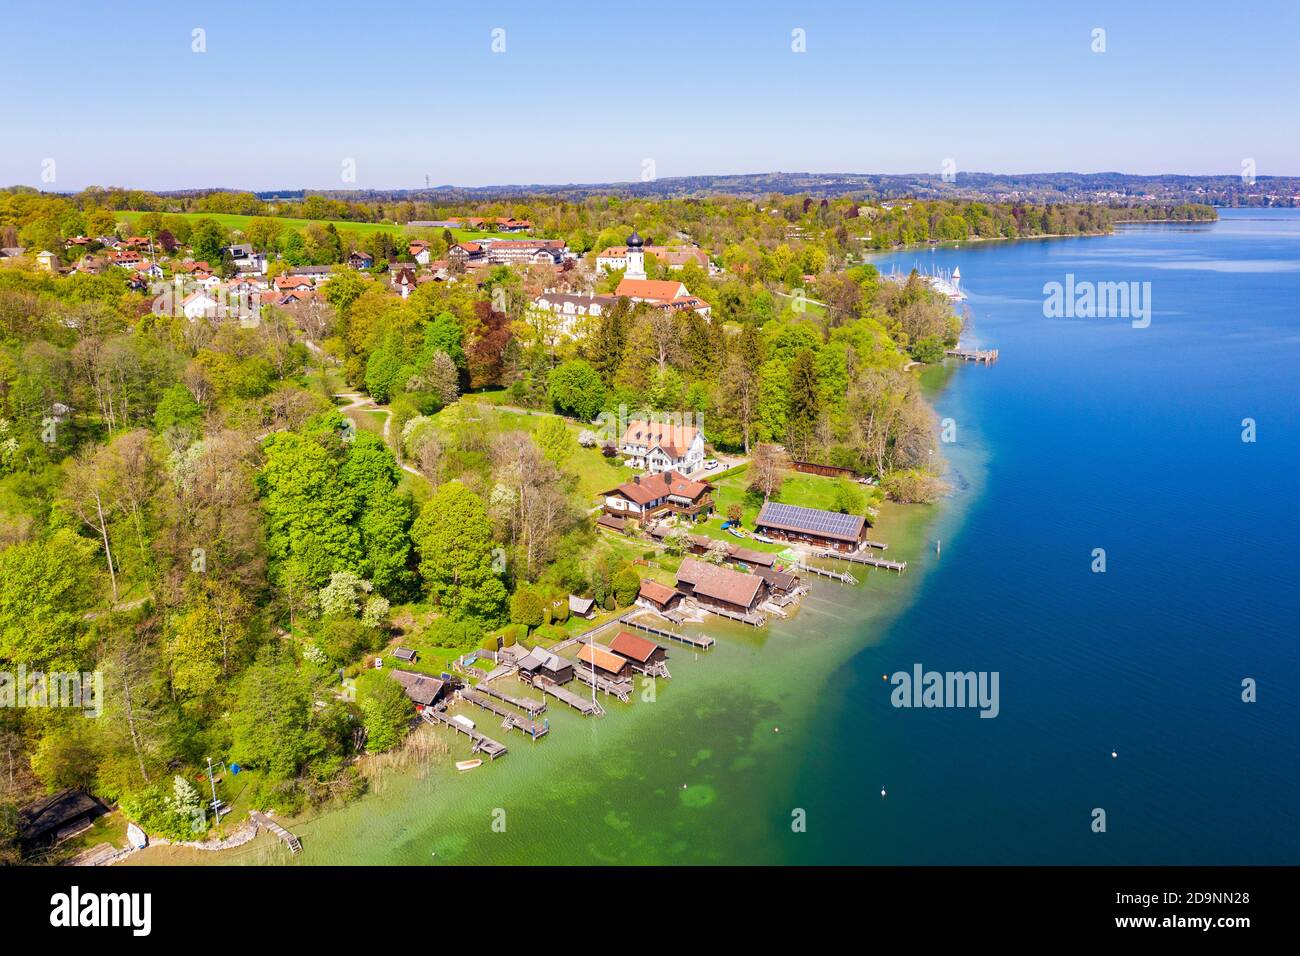 Boathouses on Lake Starnberg, Bernried, Fünfseenland, drone image, Upper Bavaria, Bavaria, Germany Stock Photo